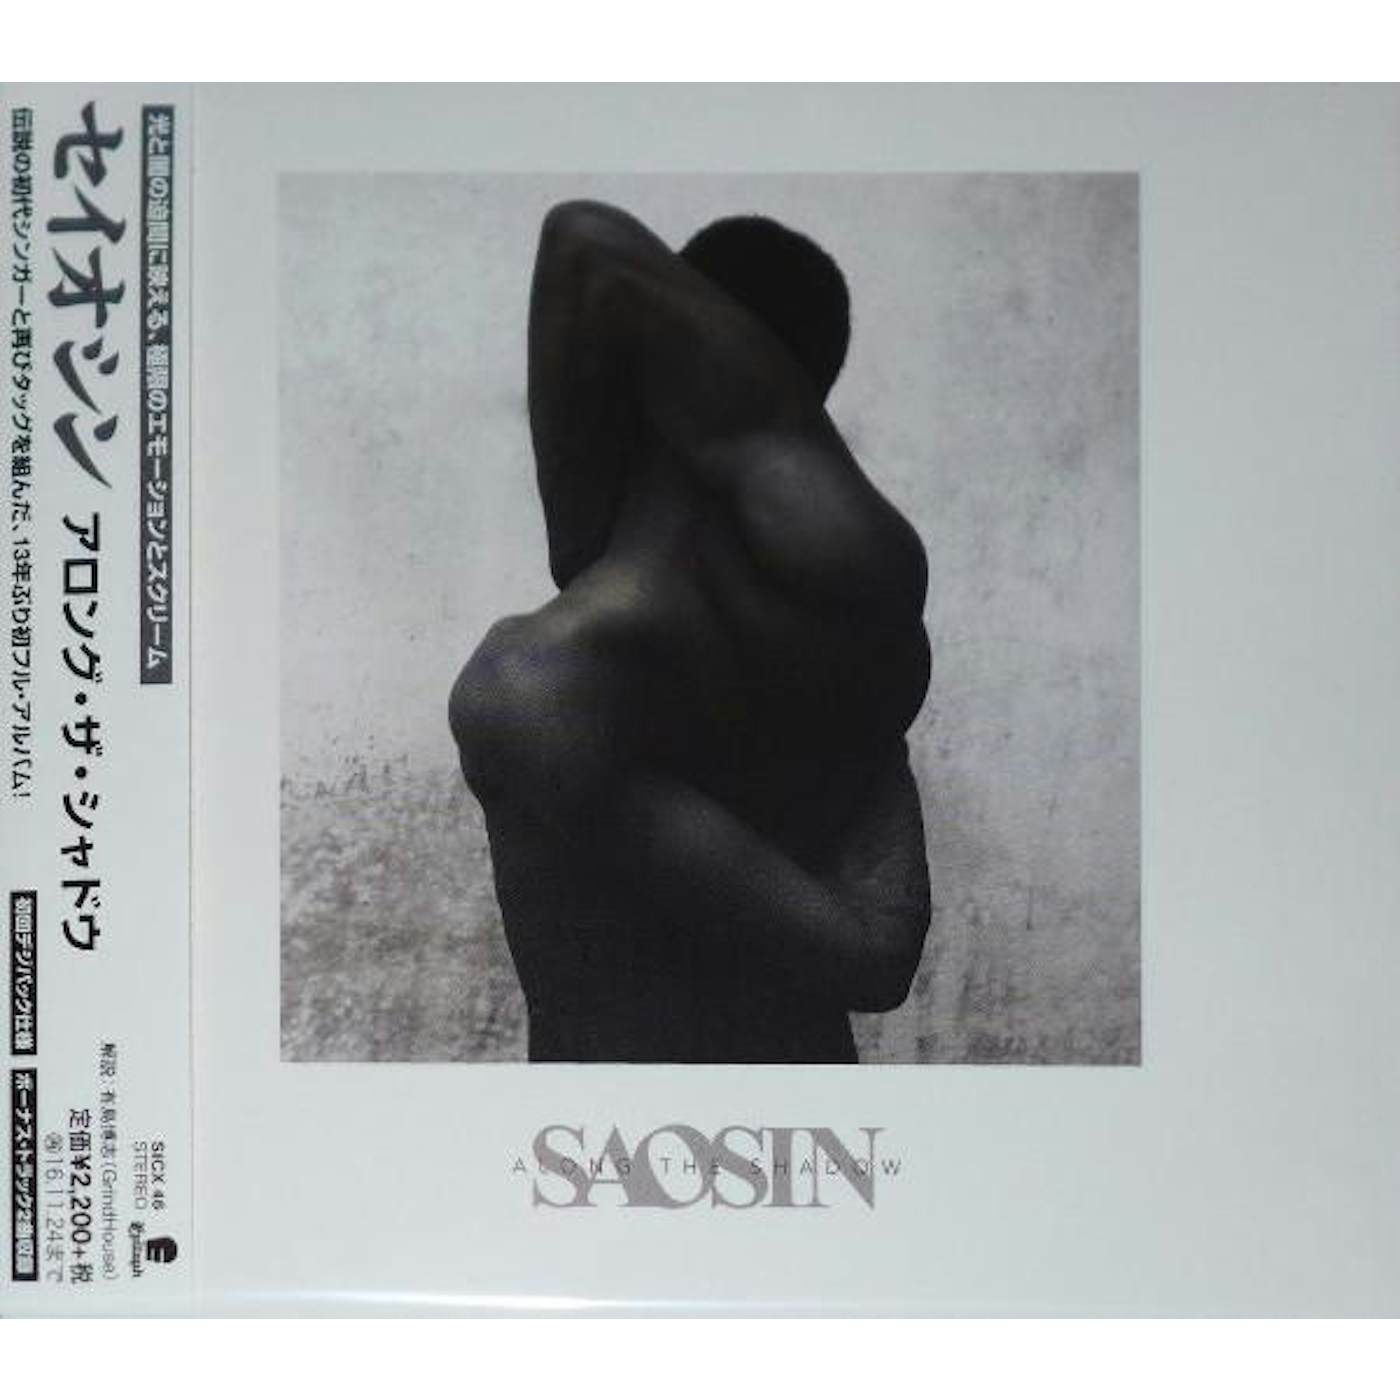 Saosin ALONG THE SHADOW (BONUS TRACK) CD